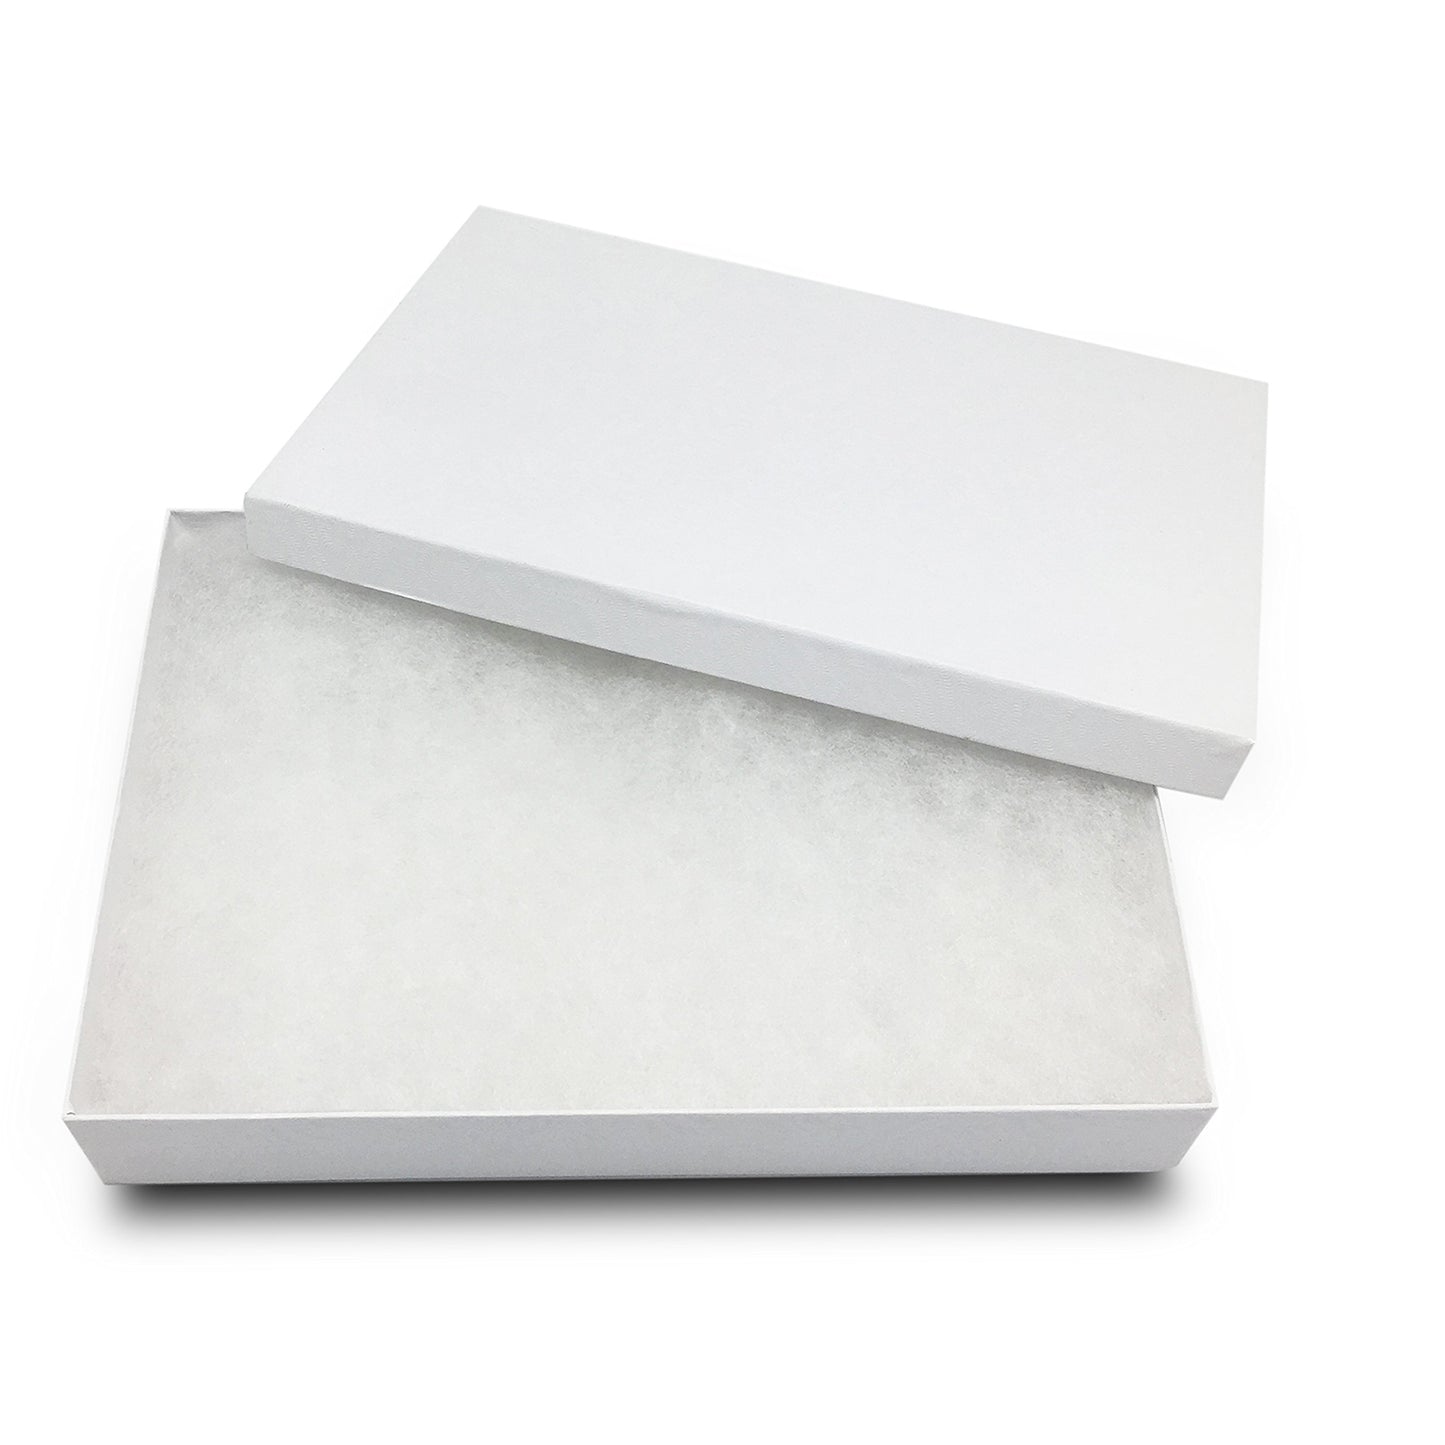 8 1/8" x 5 5/8" x 1 3/8" White Swirl Cotton Filled Paper Box